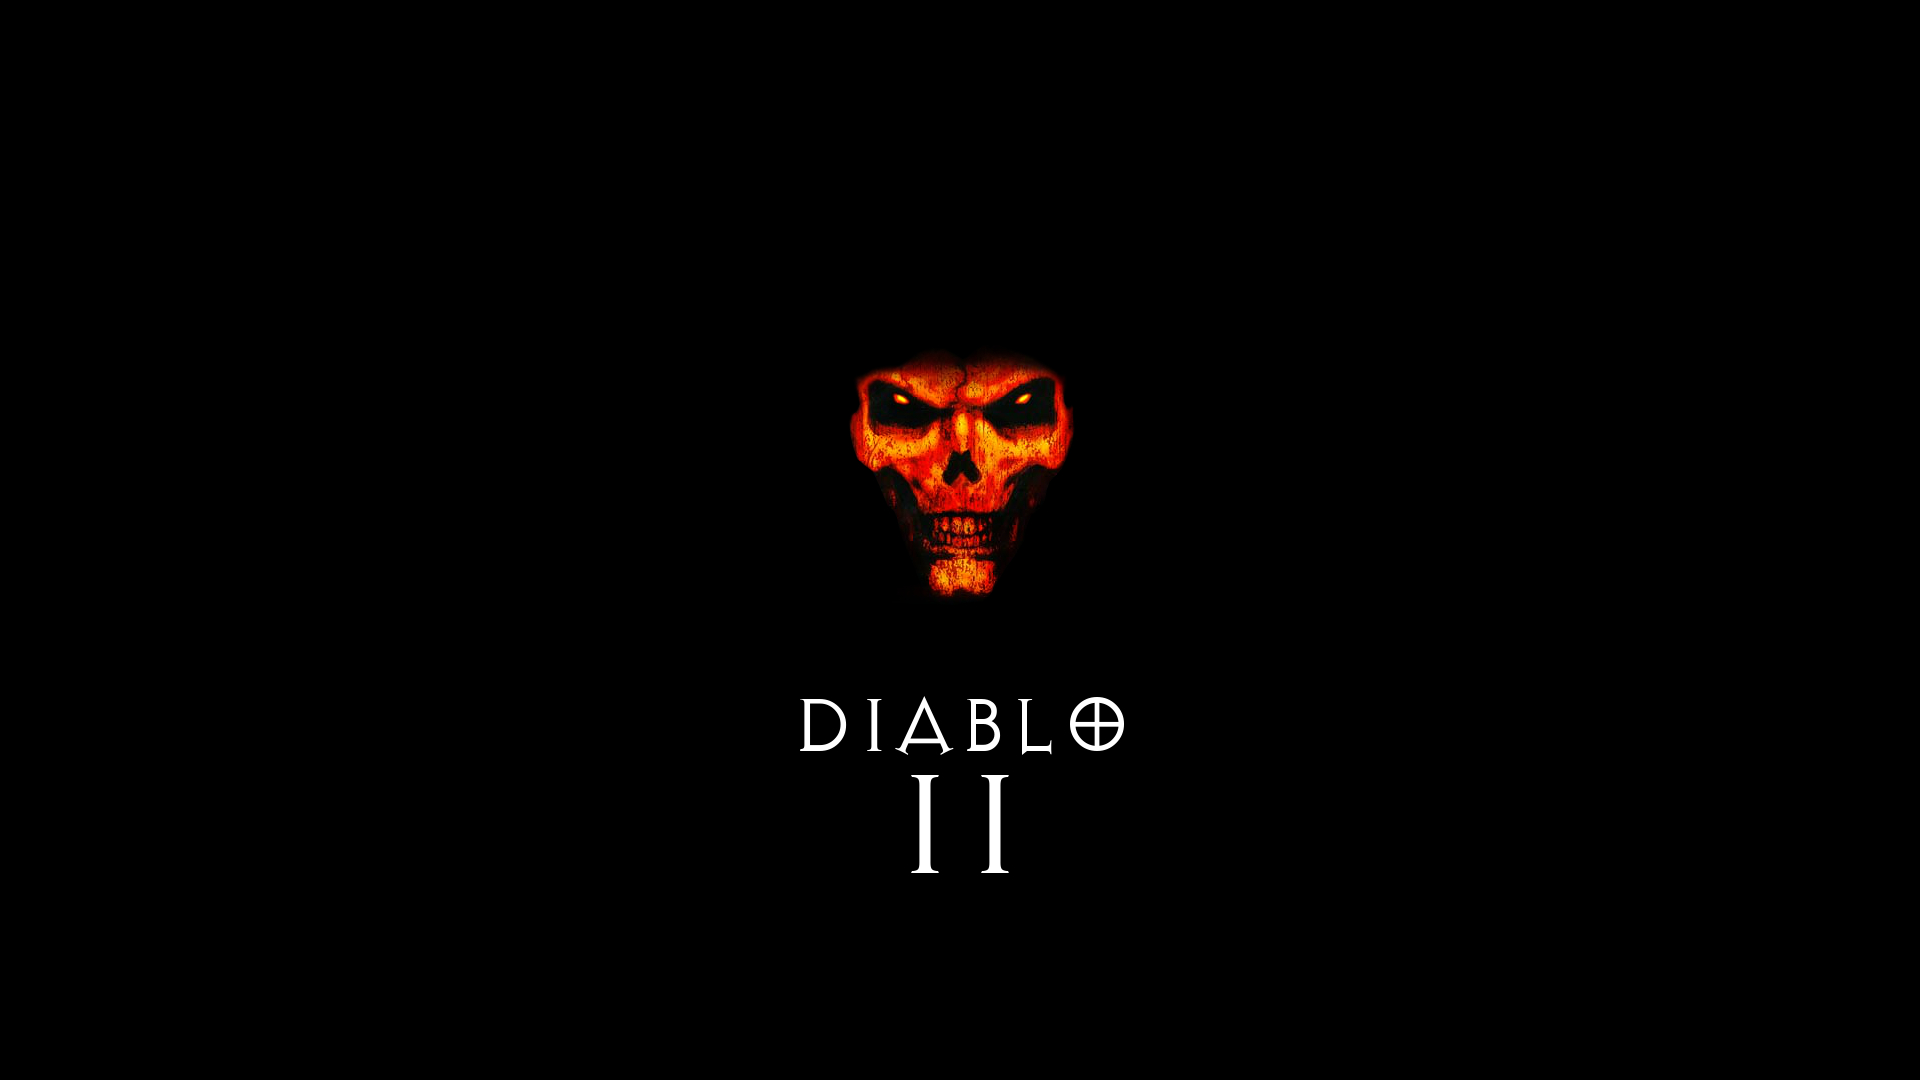 Minimalistic Diablo 2 Wallpaper by Wambologic on DeviantArt